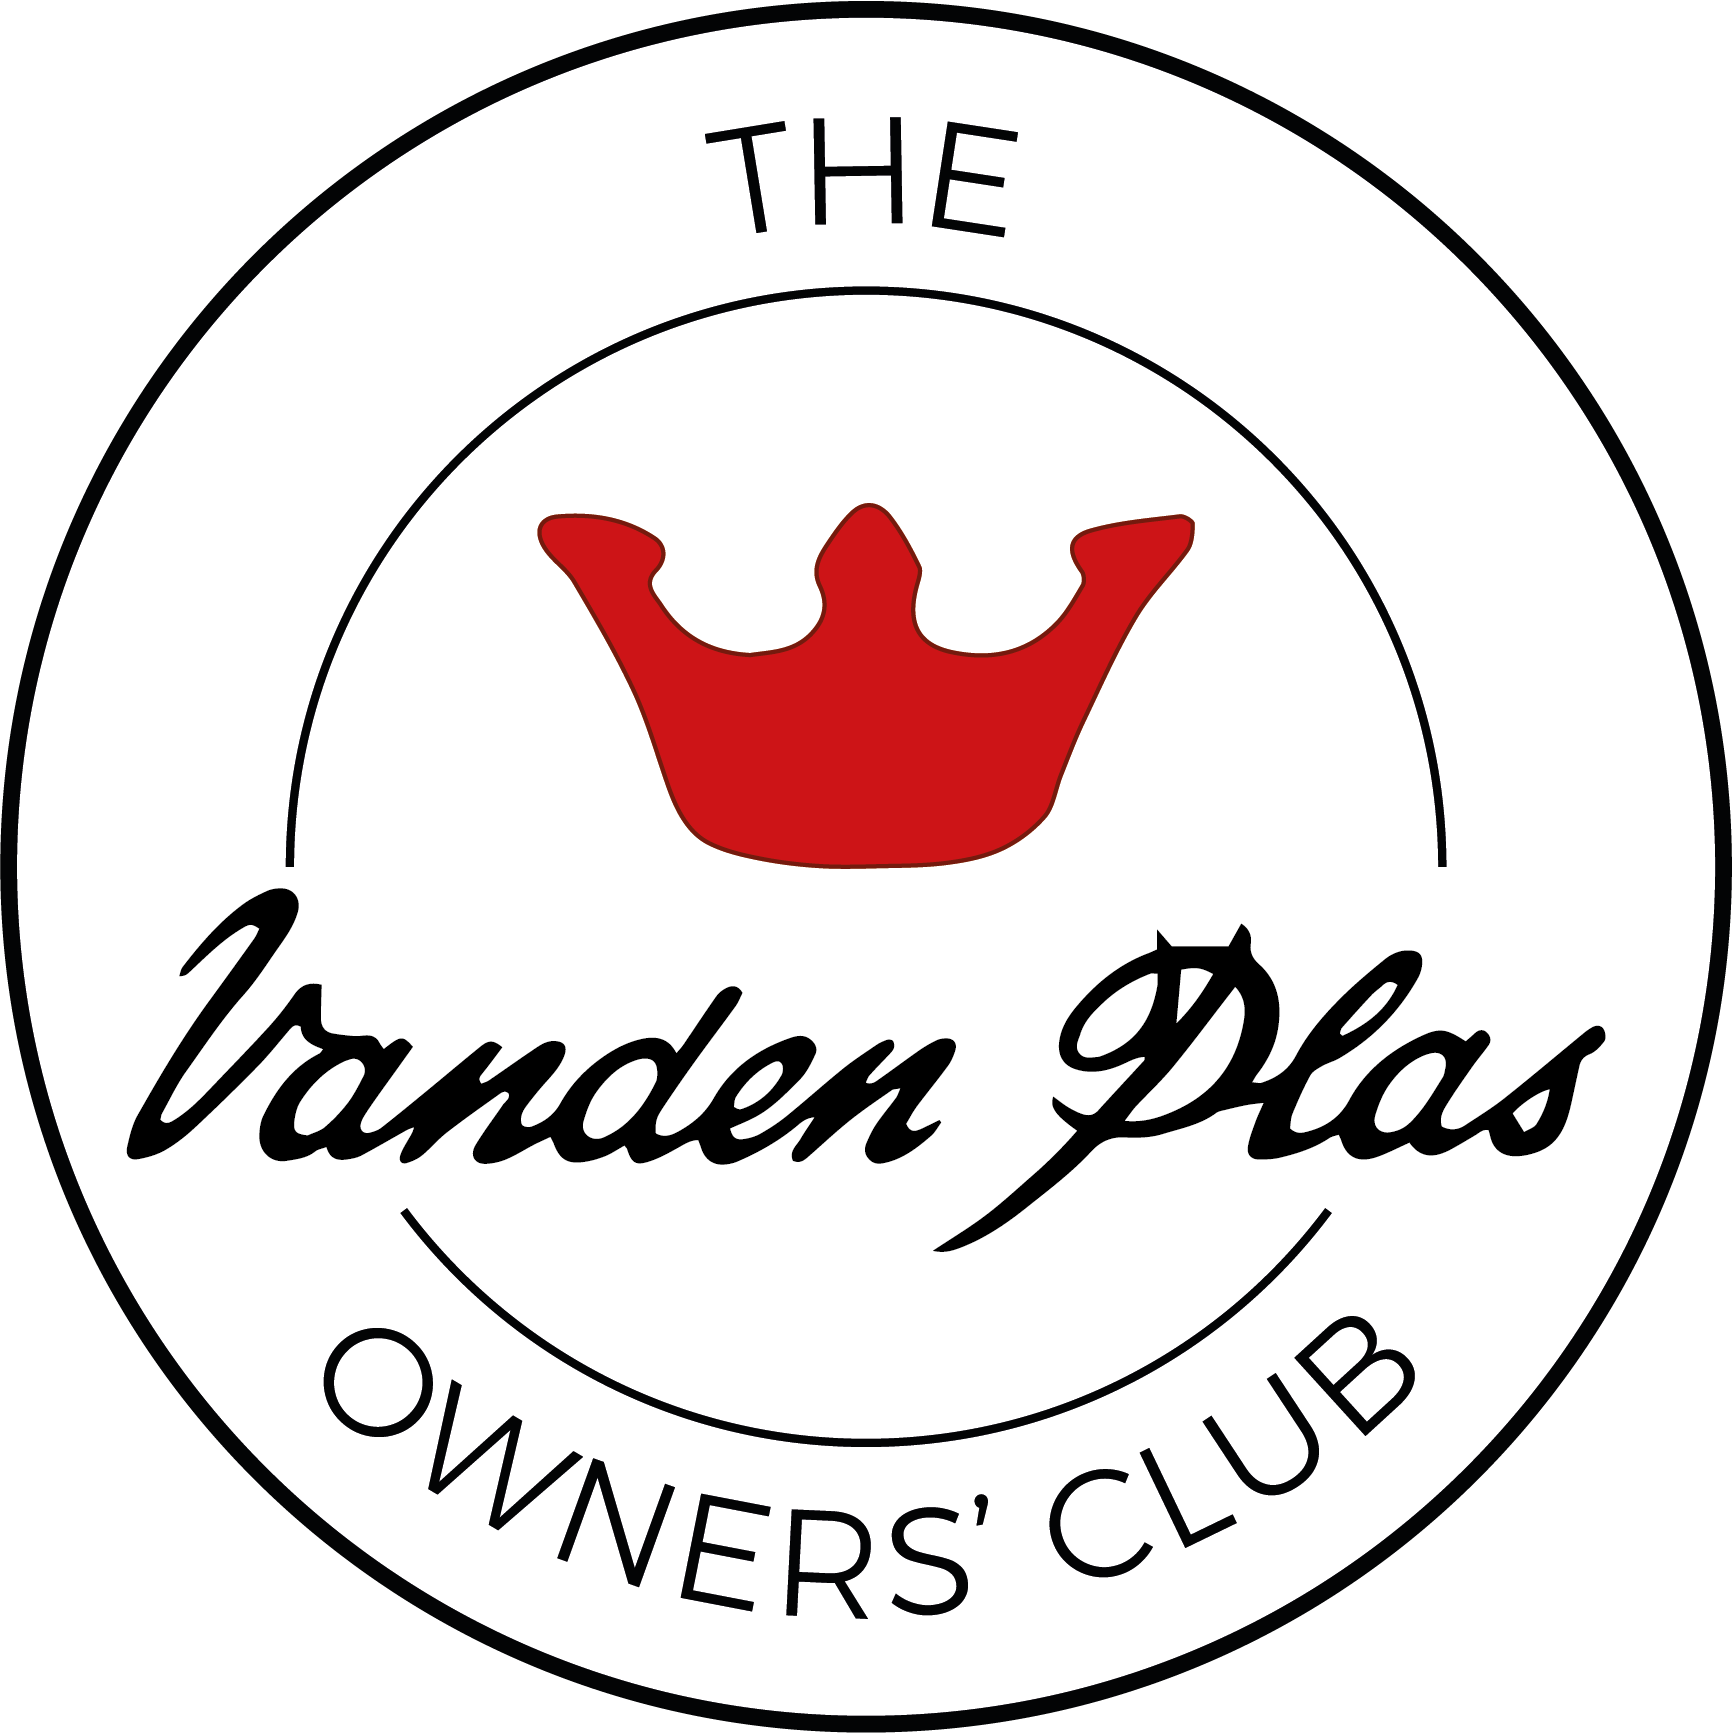 Vanden Plas Owners Club